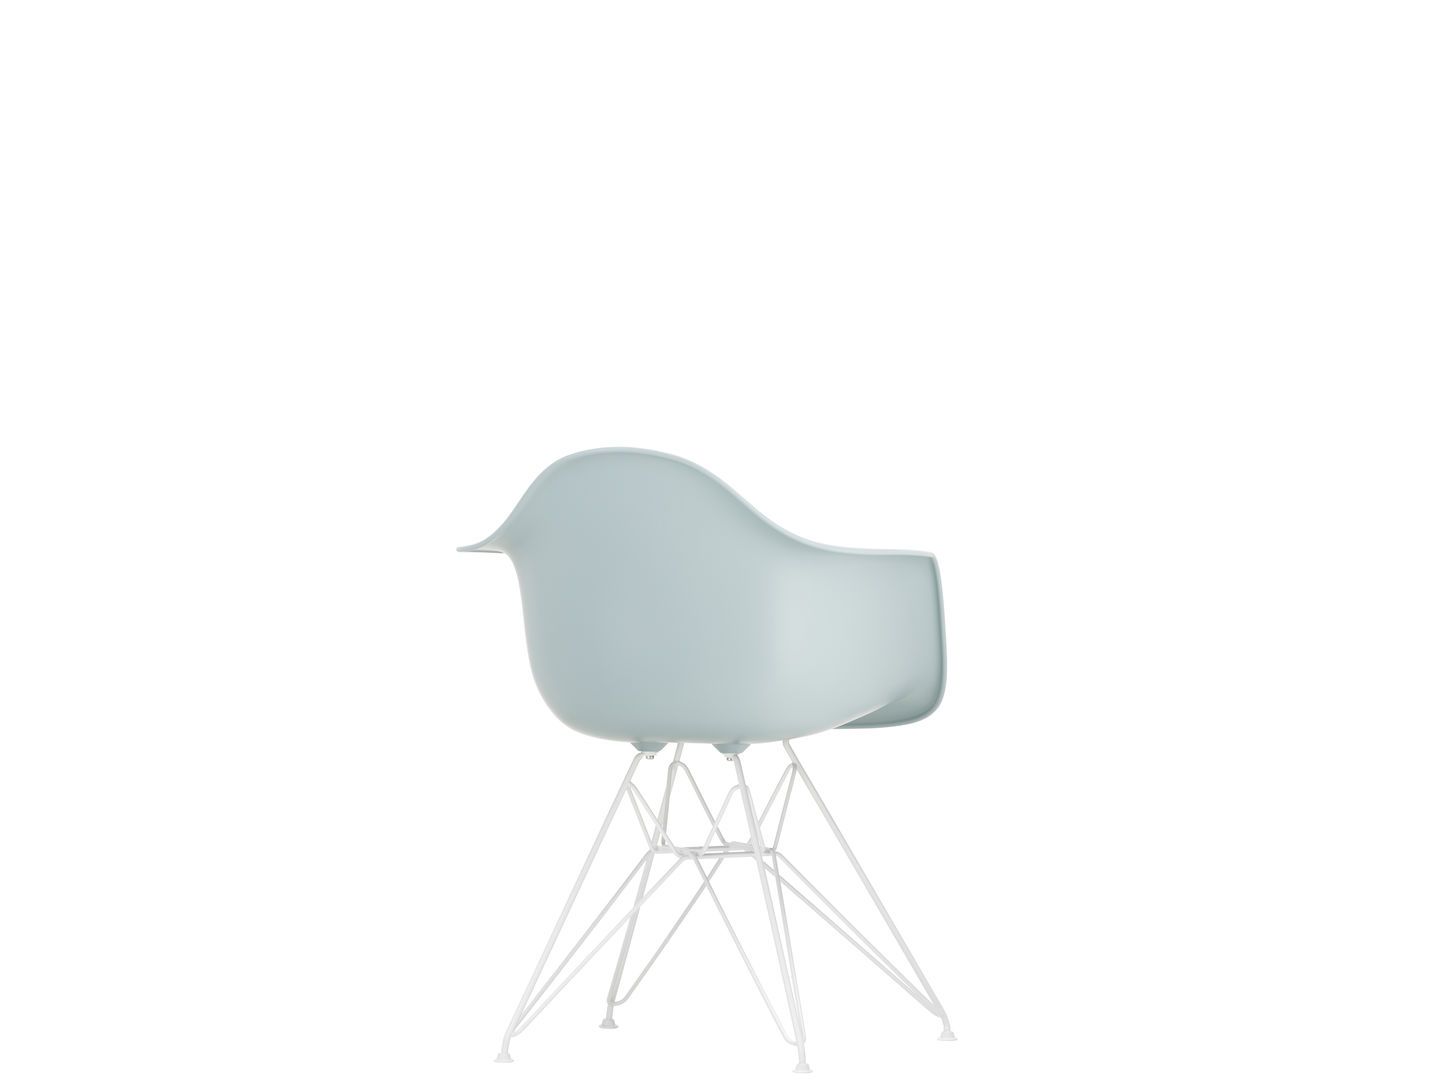 Eames Plastic Armchair DAR | One52 Furniture 